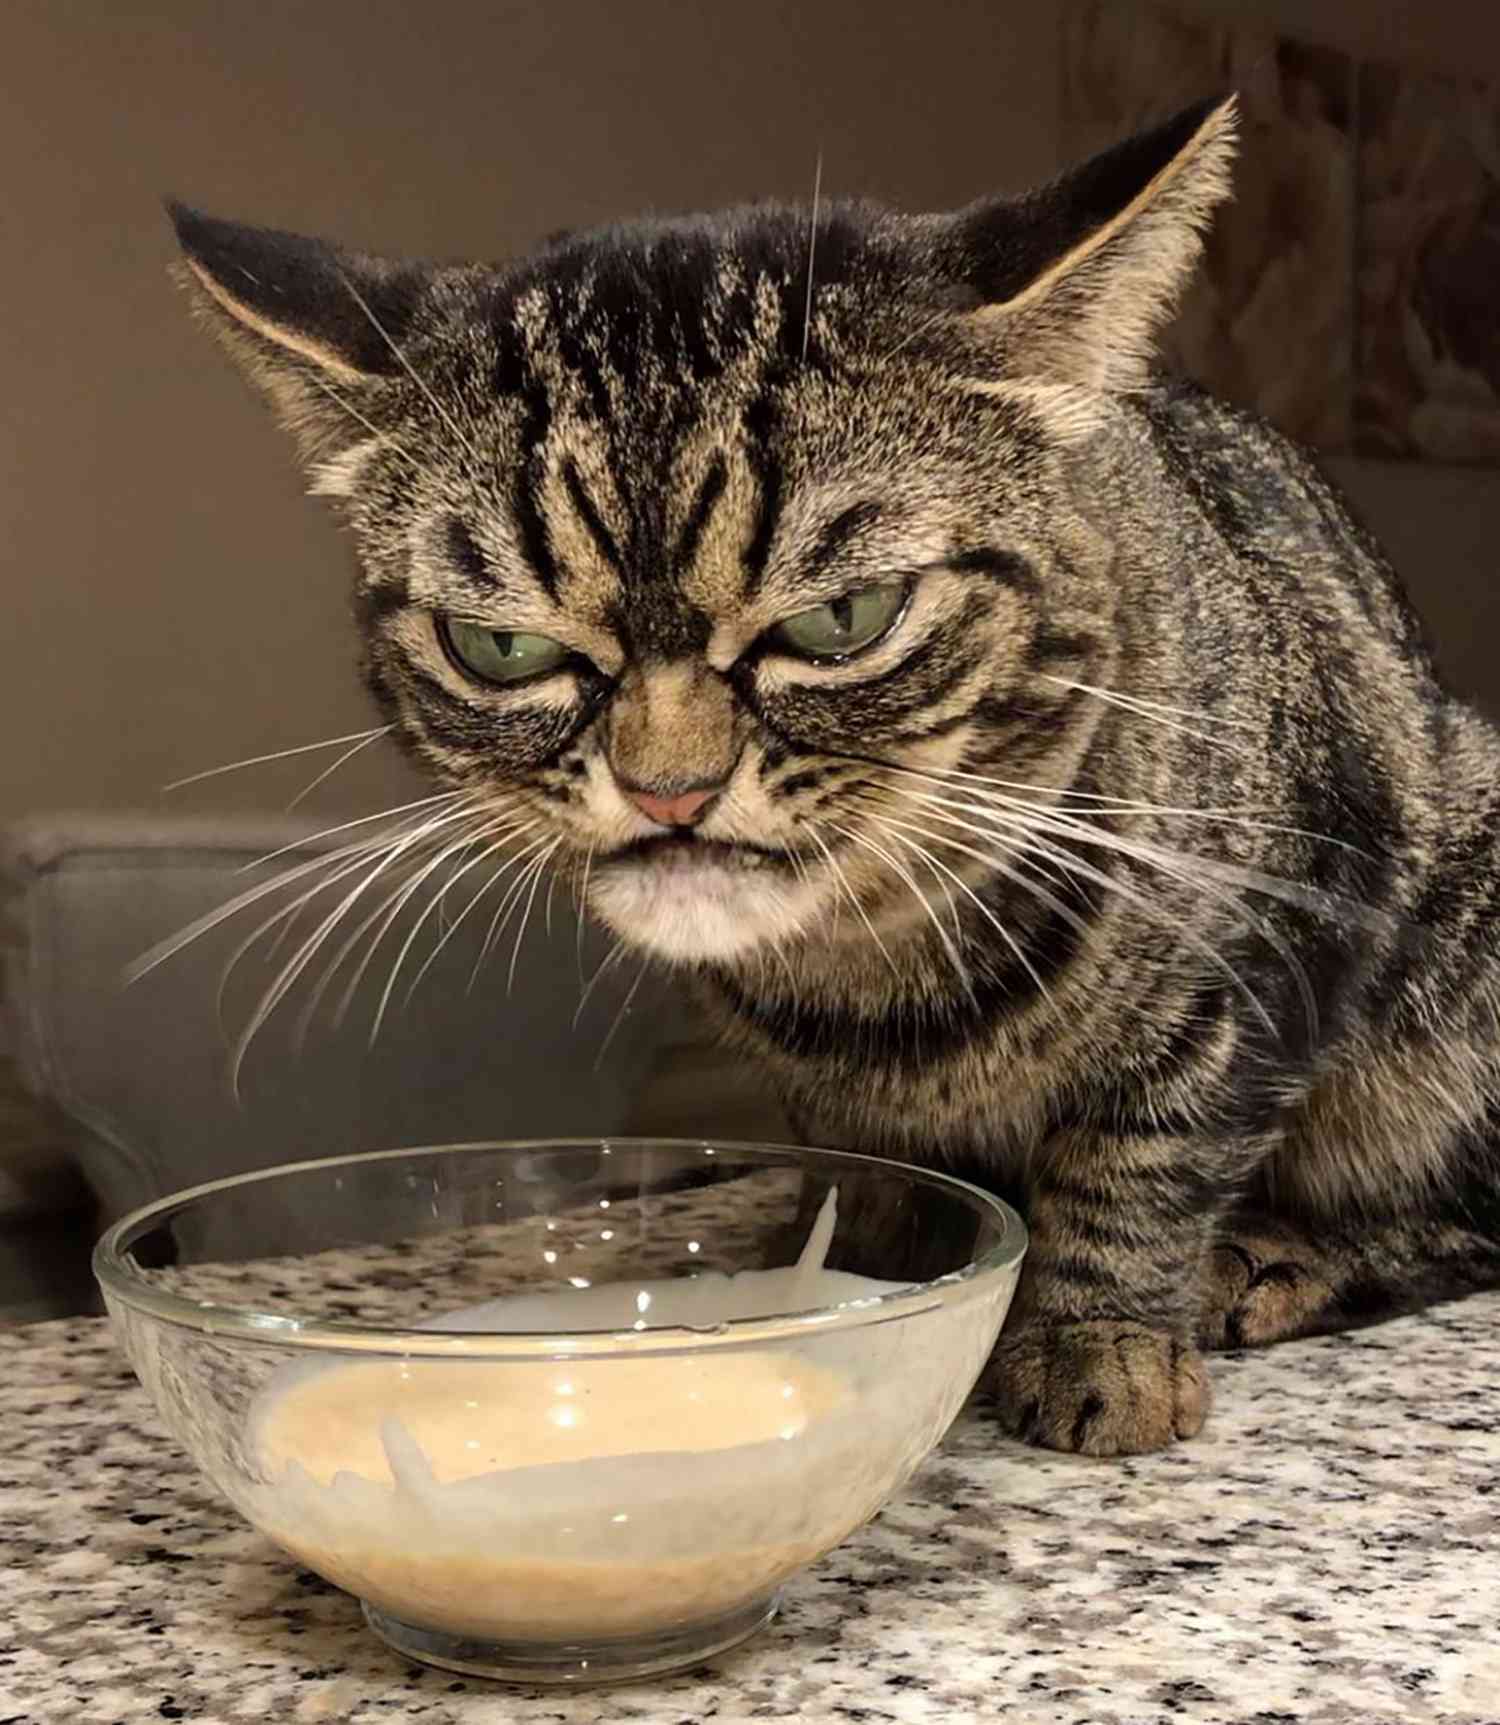 Kitzia the New Grumpy Cat on Instagram | PEOPLE.com